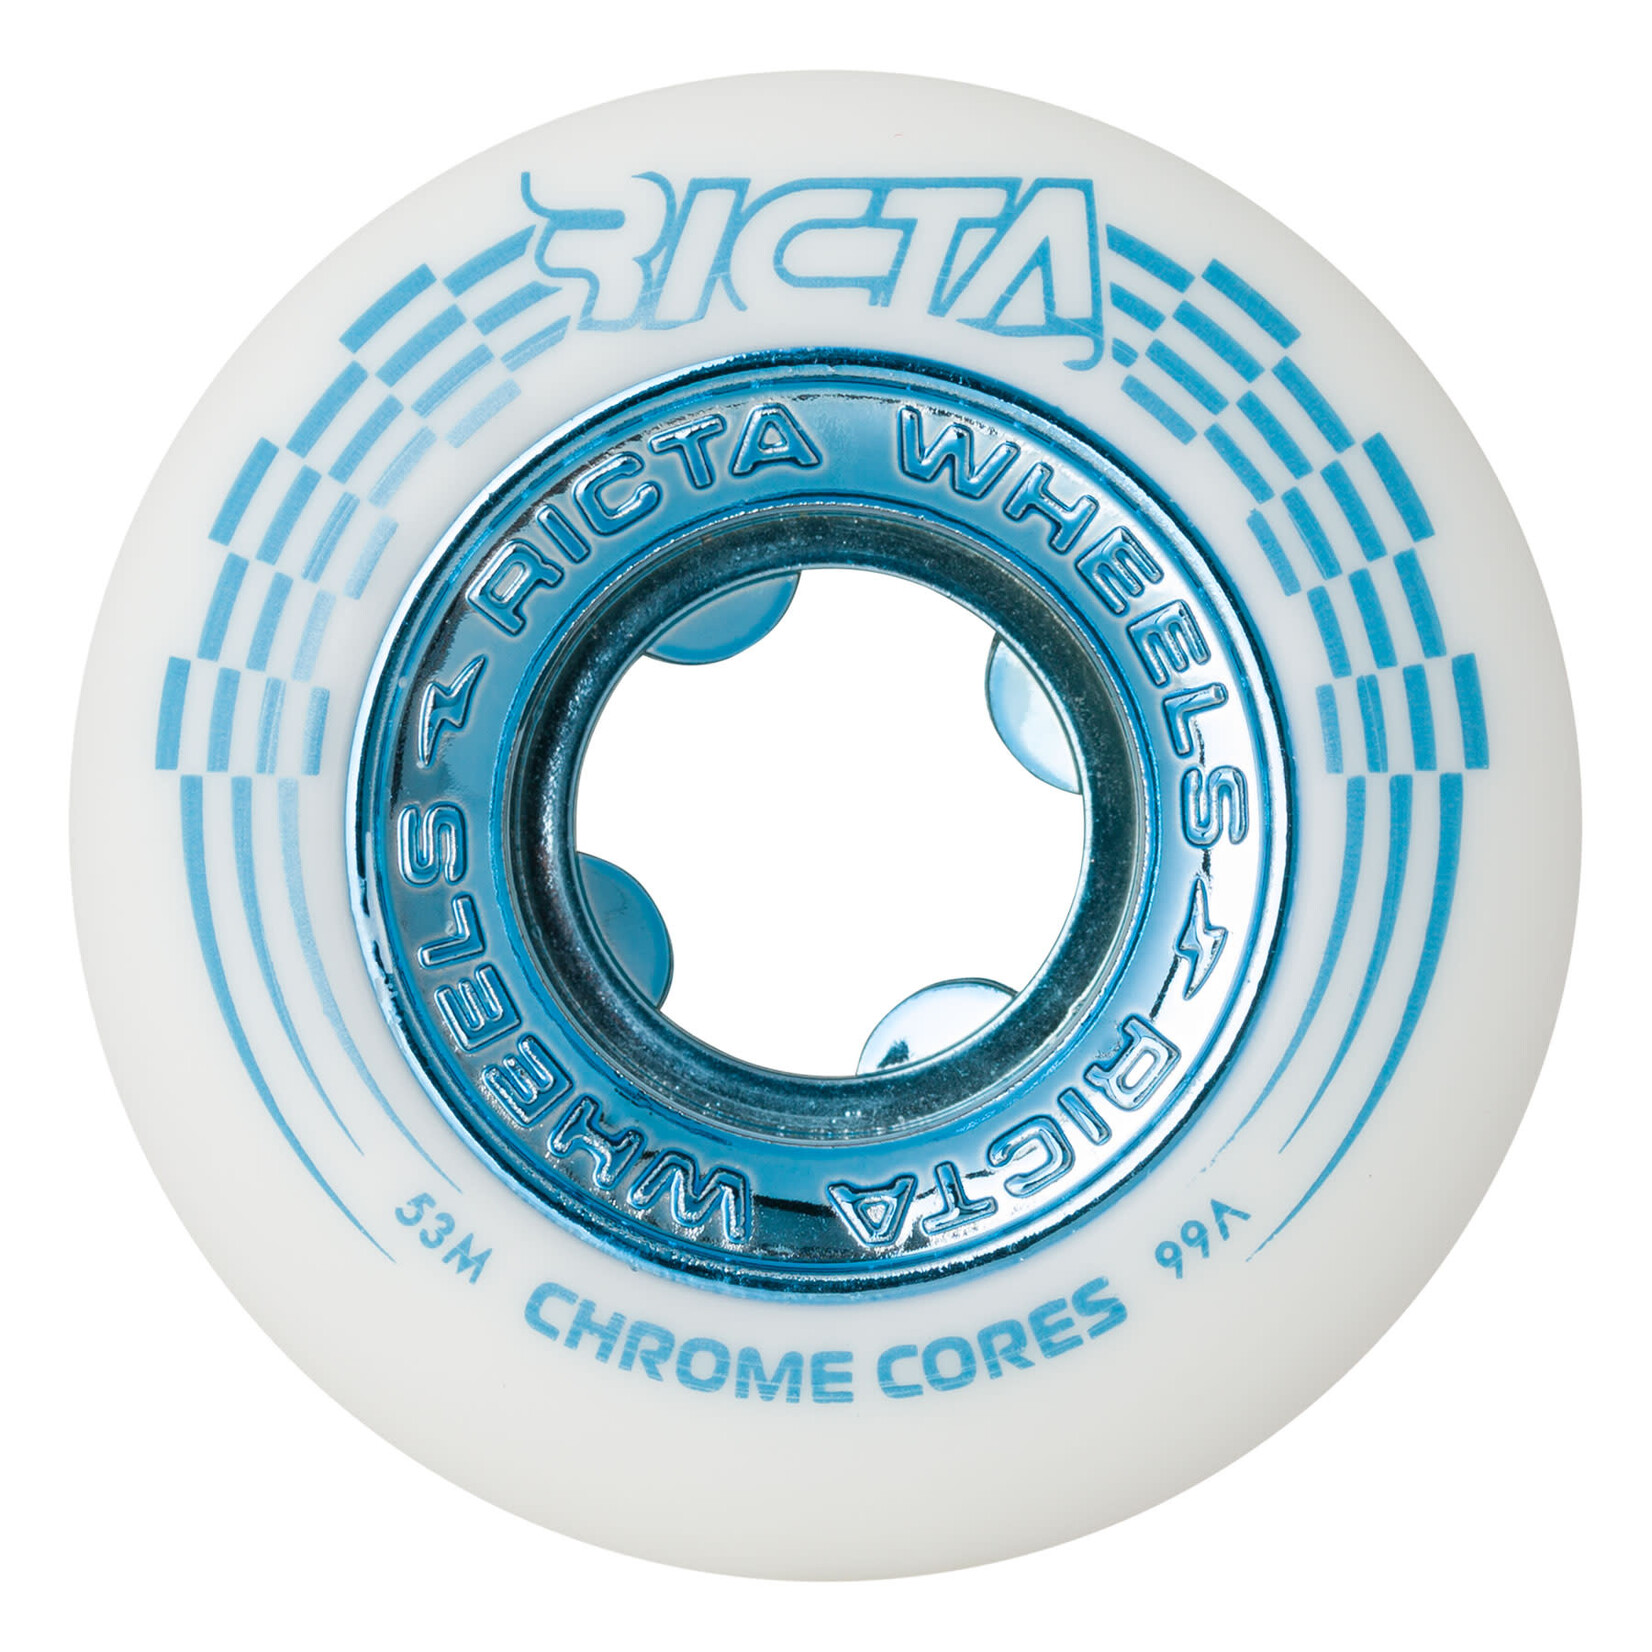 Ricta Ricta Chrome Core Teal 99a Skateboard Wheels - 53mm